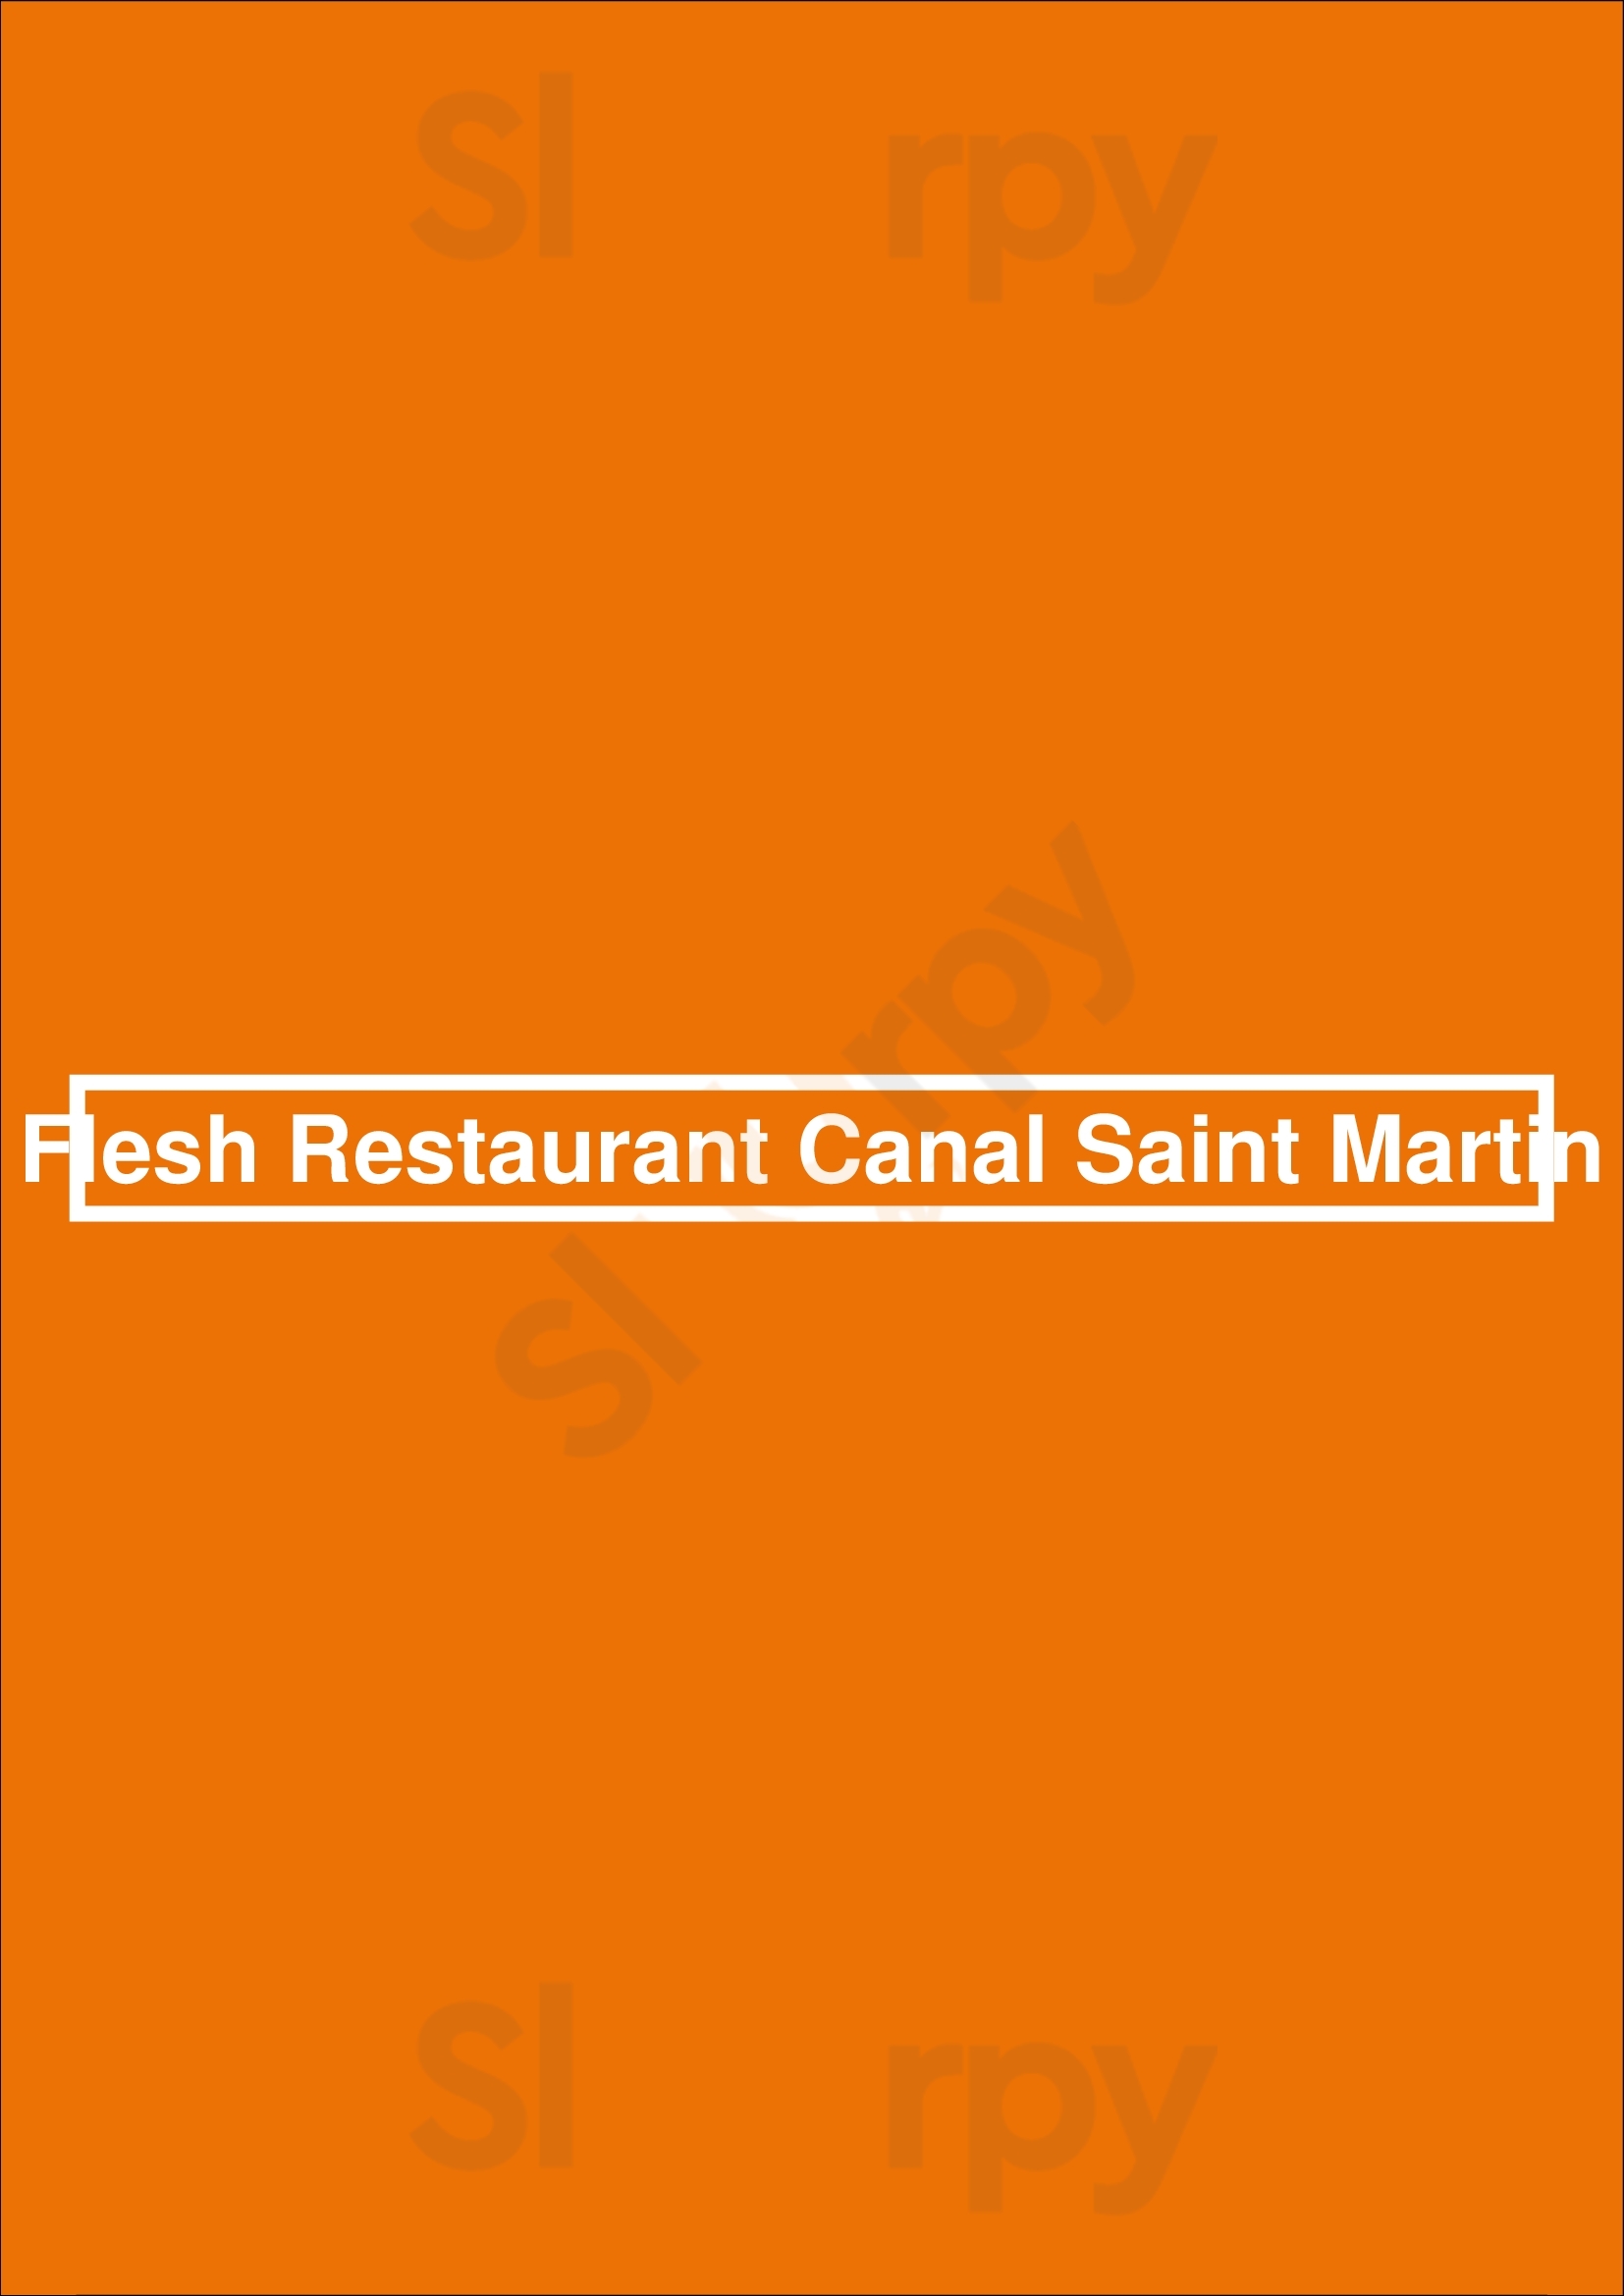 Flesh Restaurant Canal Saint Martin Paris Menu - 1